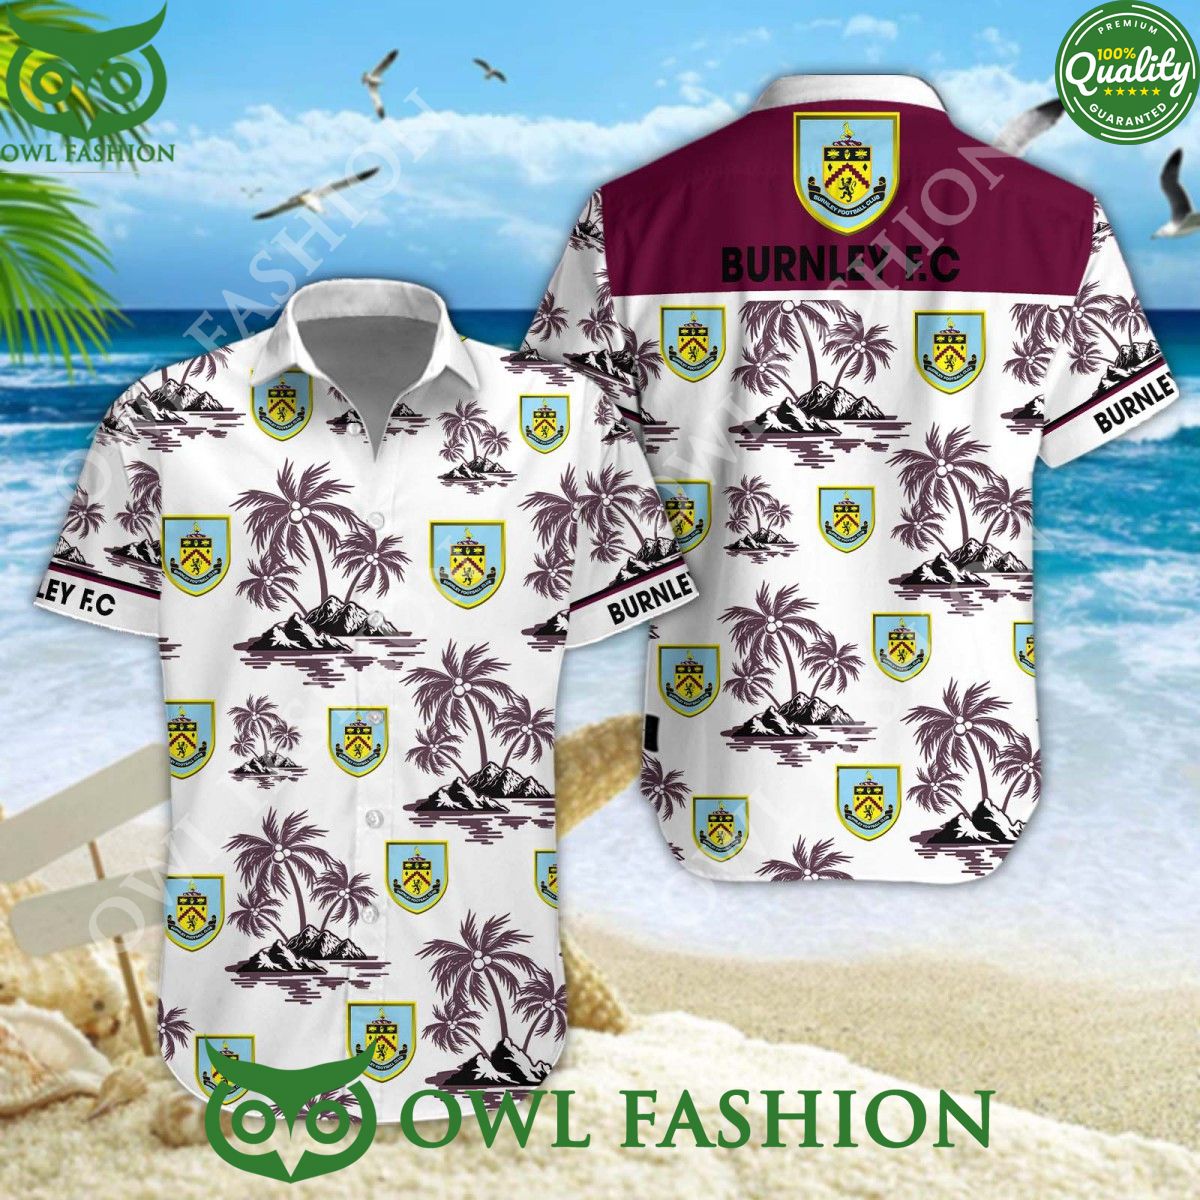 burnley f c vincent kompany epl coconut hawaiian shirt 1 JOLGa.jpg